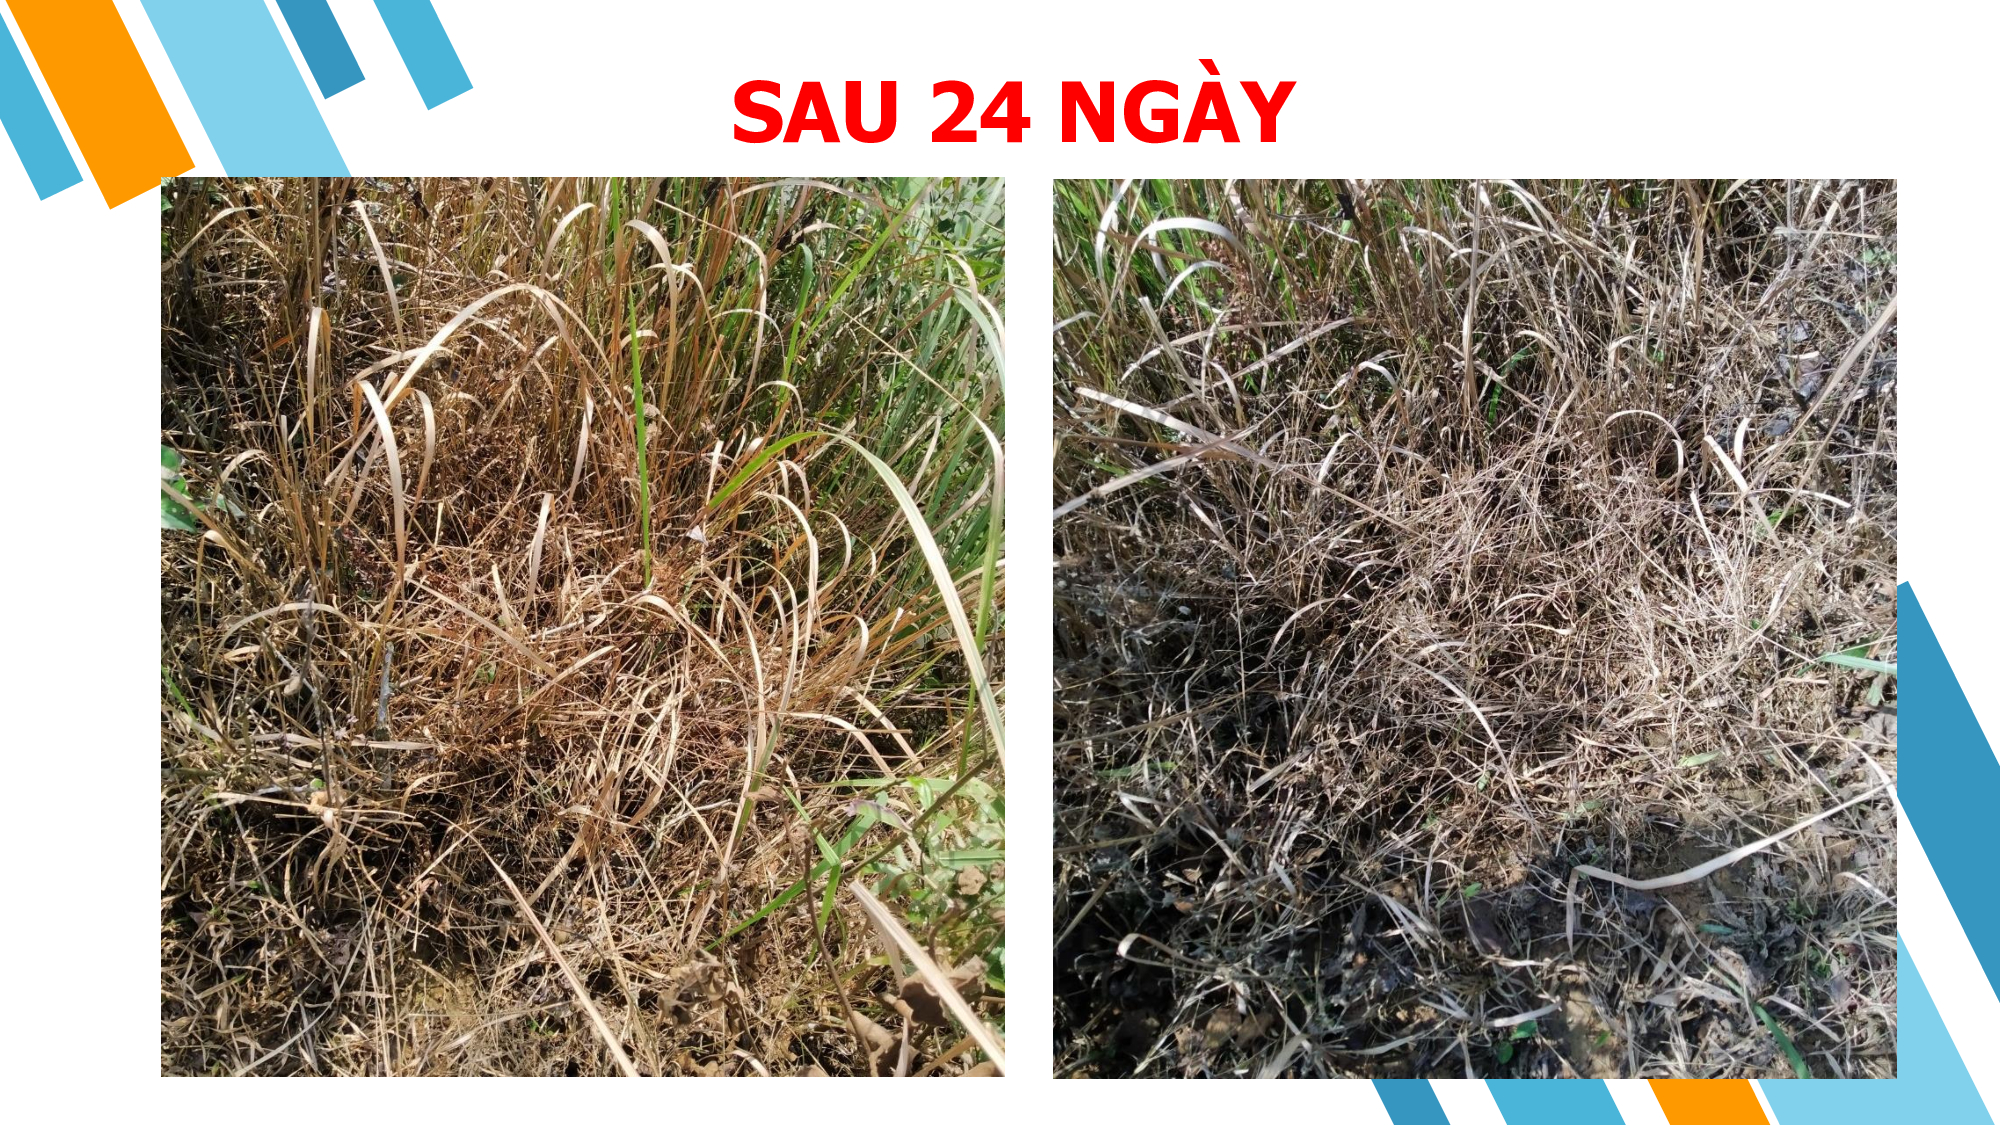 Hiệu lực thuốc trừ cỏ SUNFOSINAT™ 200SL (Glufosinate Ammonium 200g/l) trên Cỏ vừng, cỏ tranh